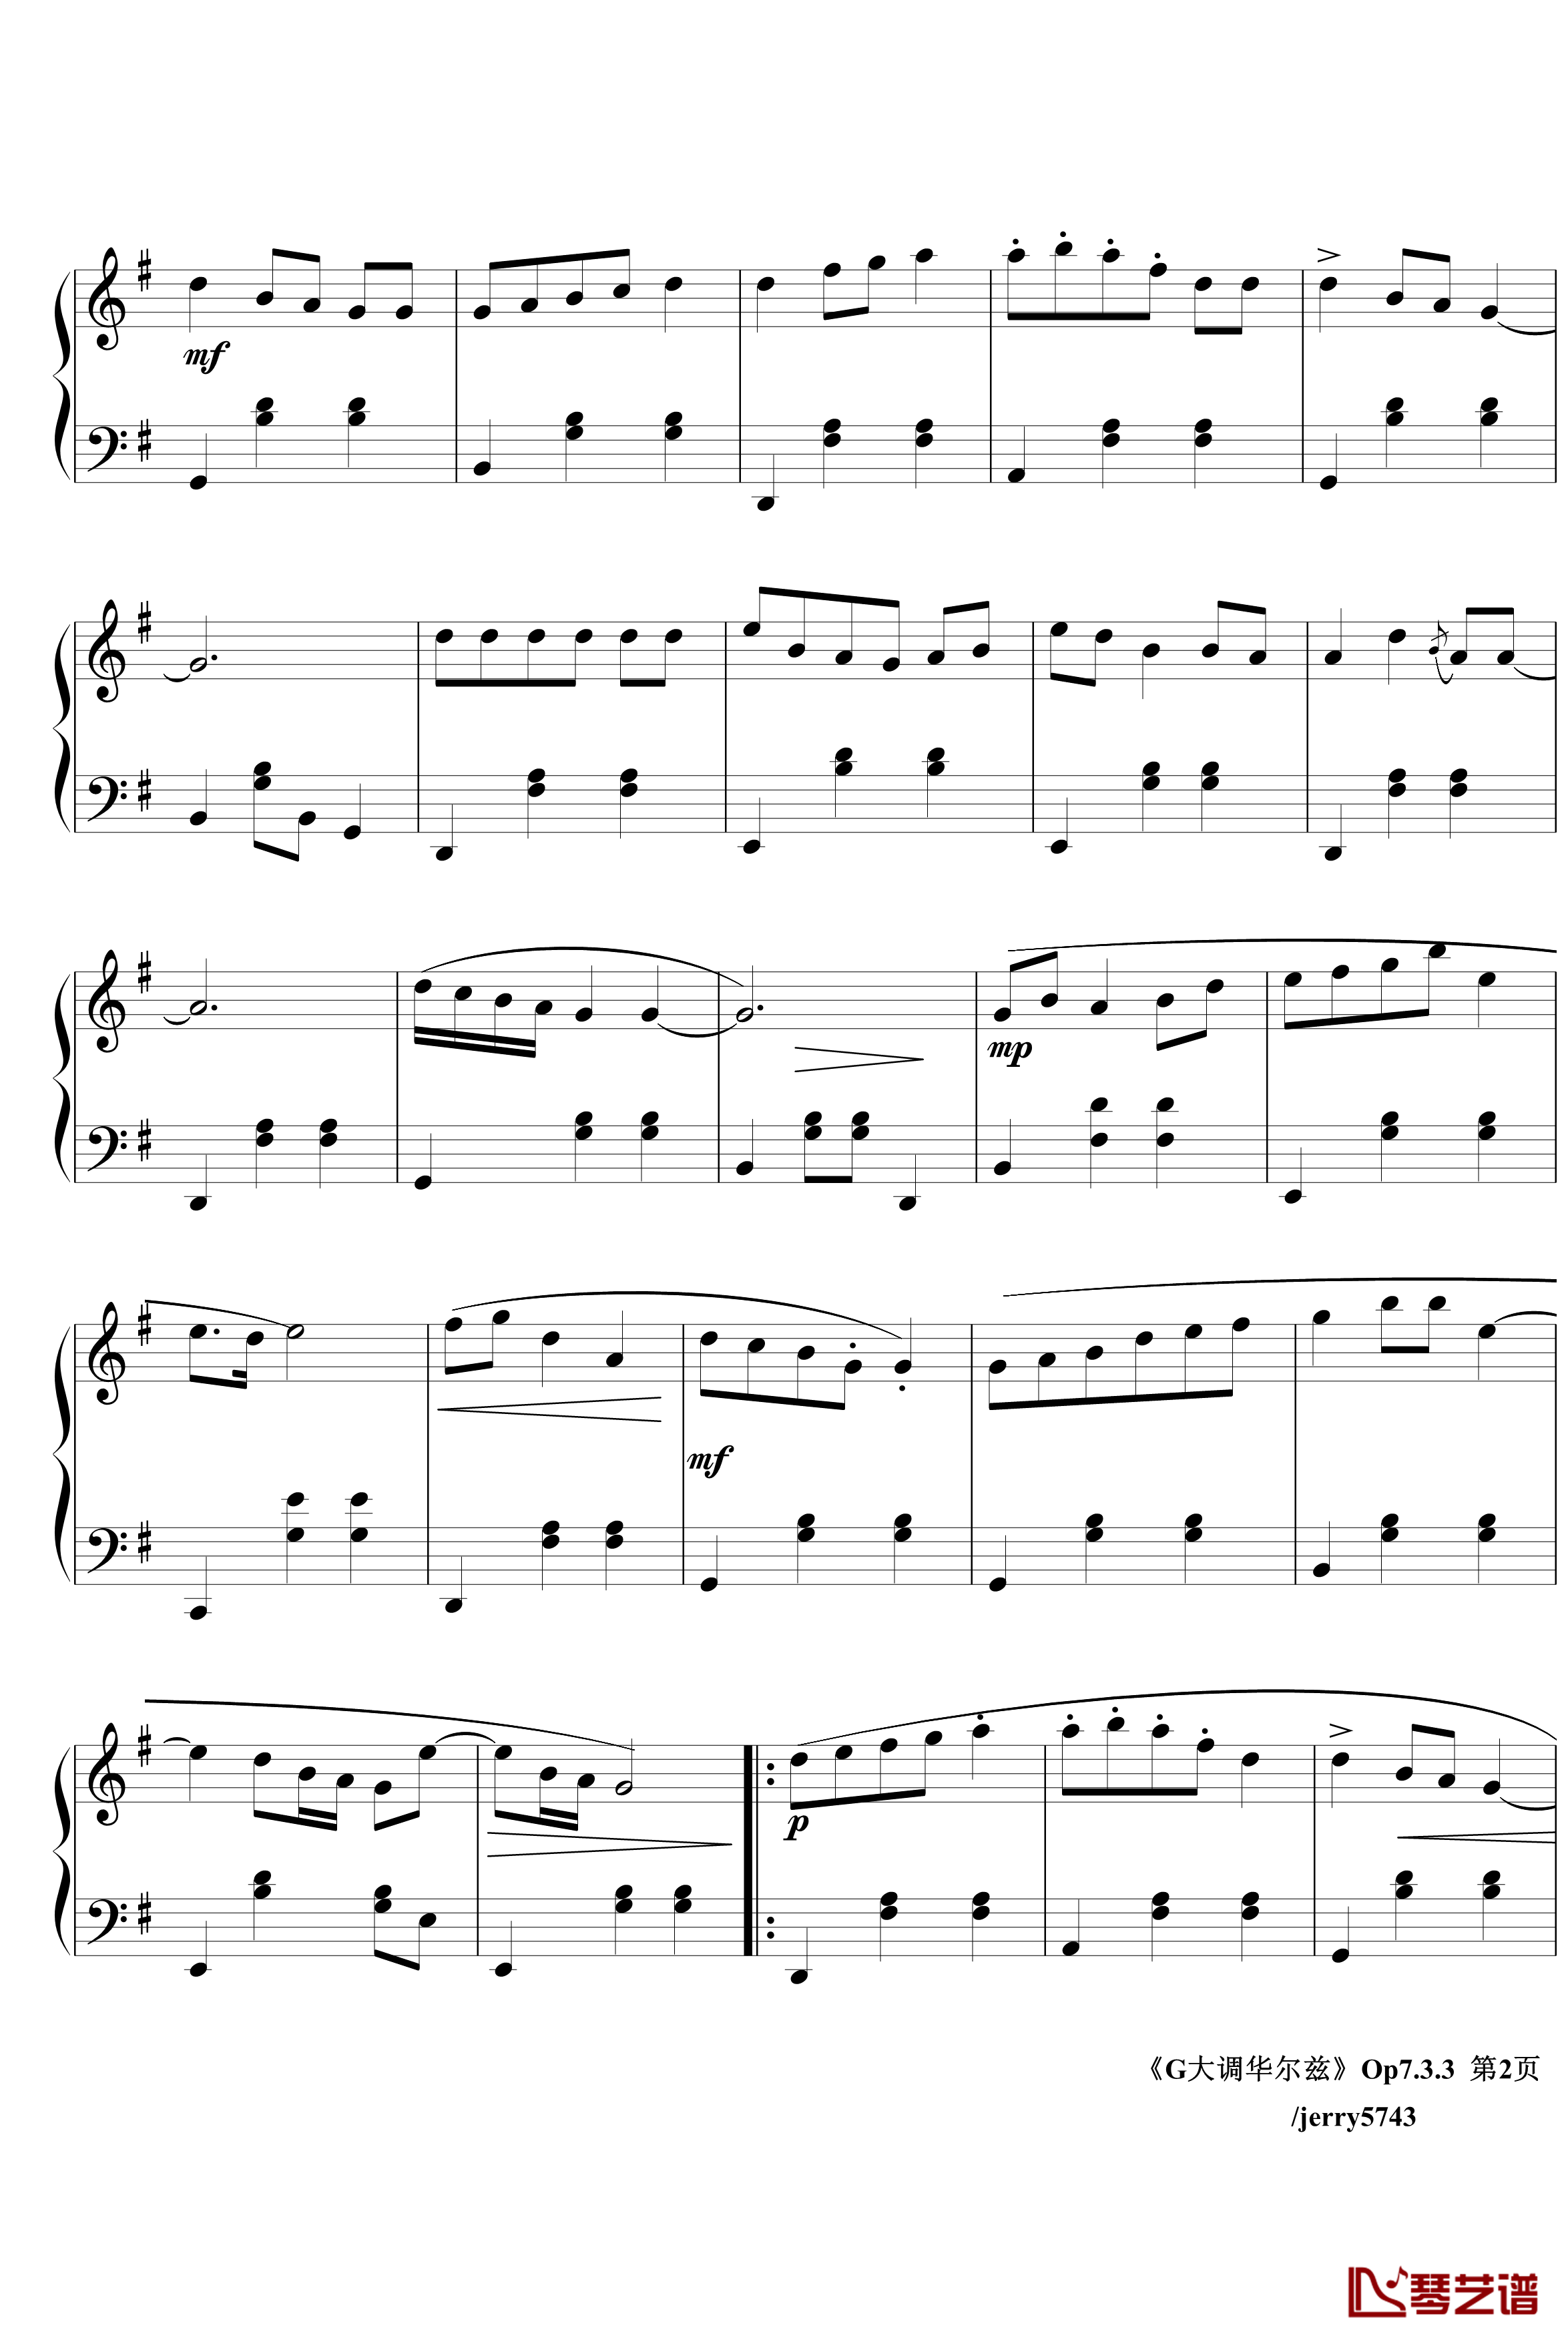 G大调华尔兹Op7.3.3钢琴谱-jerry57432